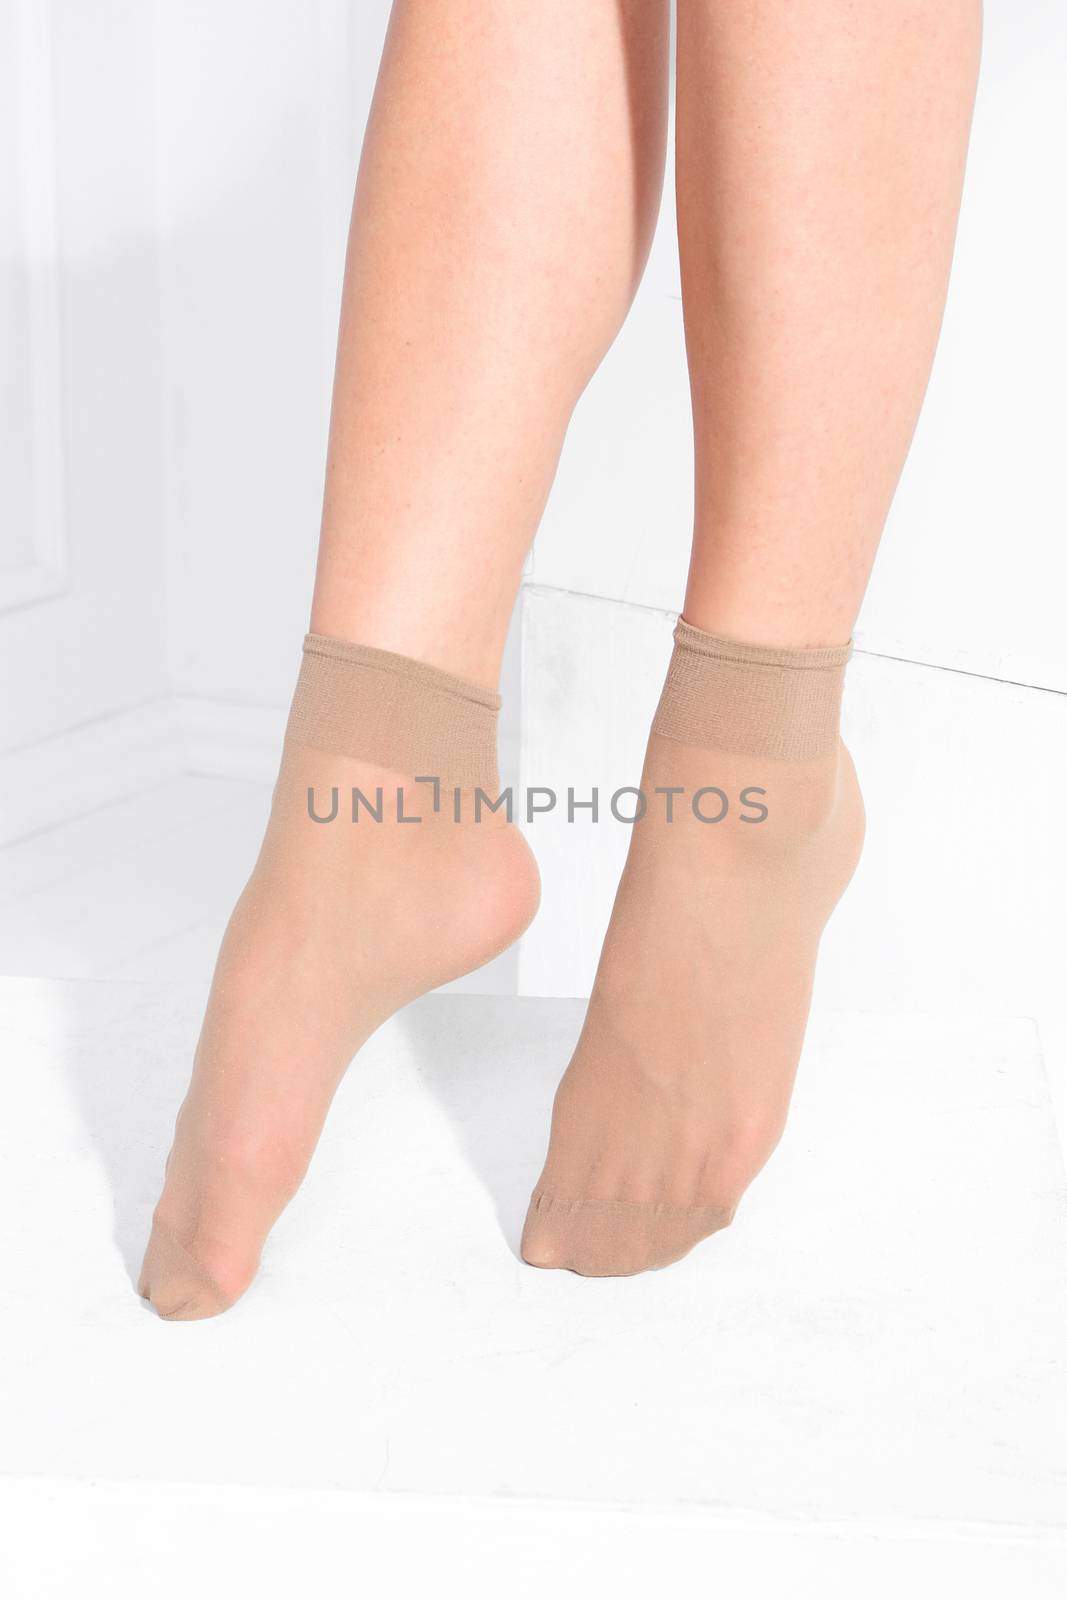 Female legs in tights, stockings, socks.